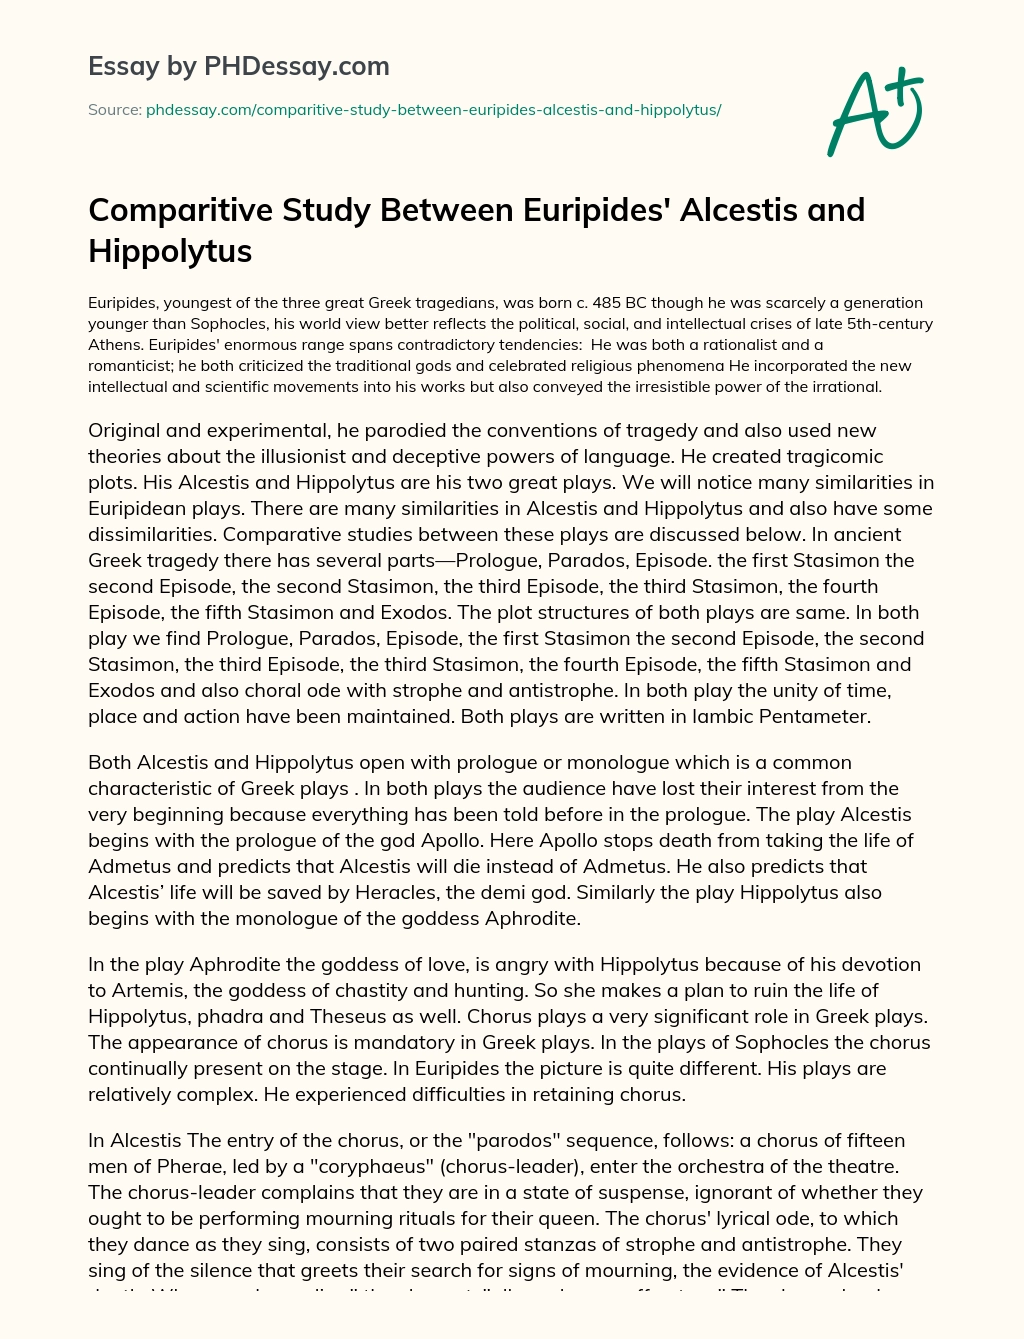 Comparitive Study Between Euripides’ Alcestis and Hippolytus essay